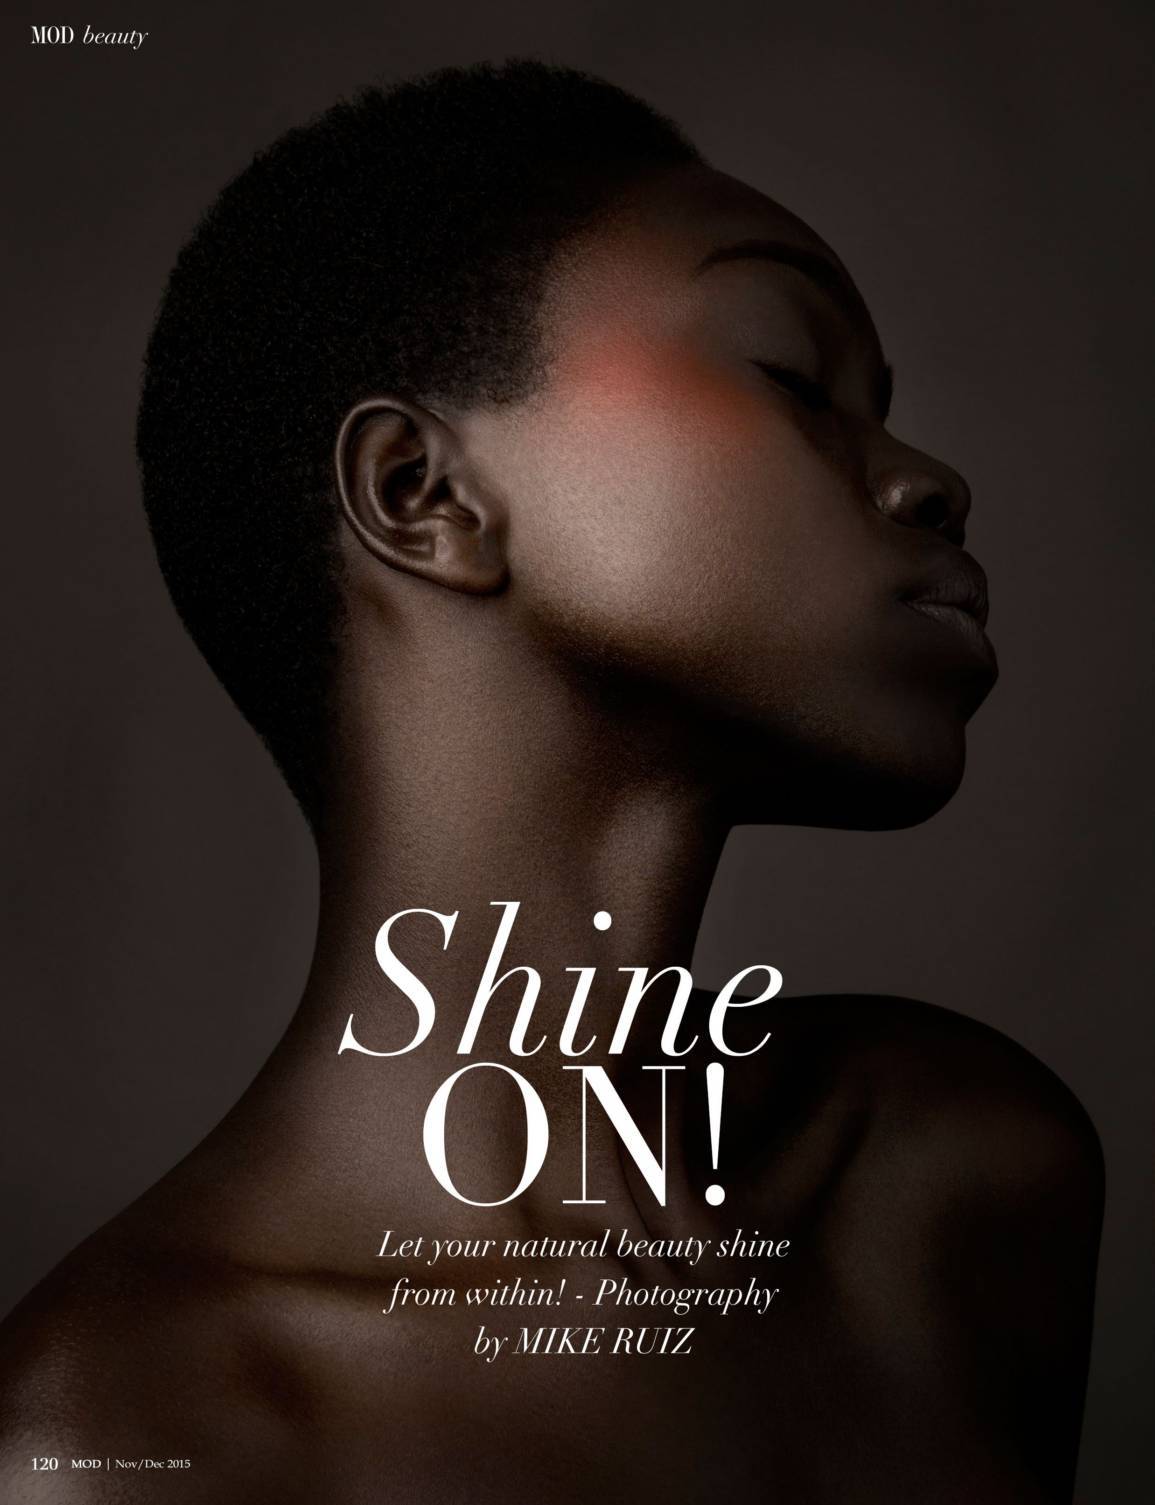 hellyeahblackmodels:  “Shine On!” - MOD Magazine Issue 6 